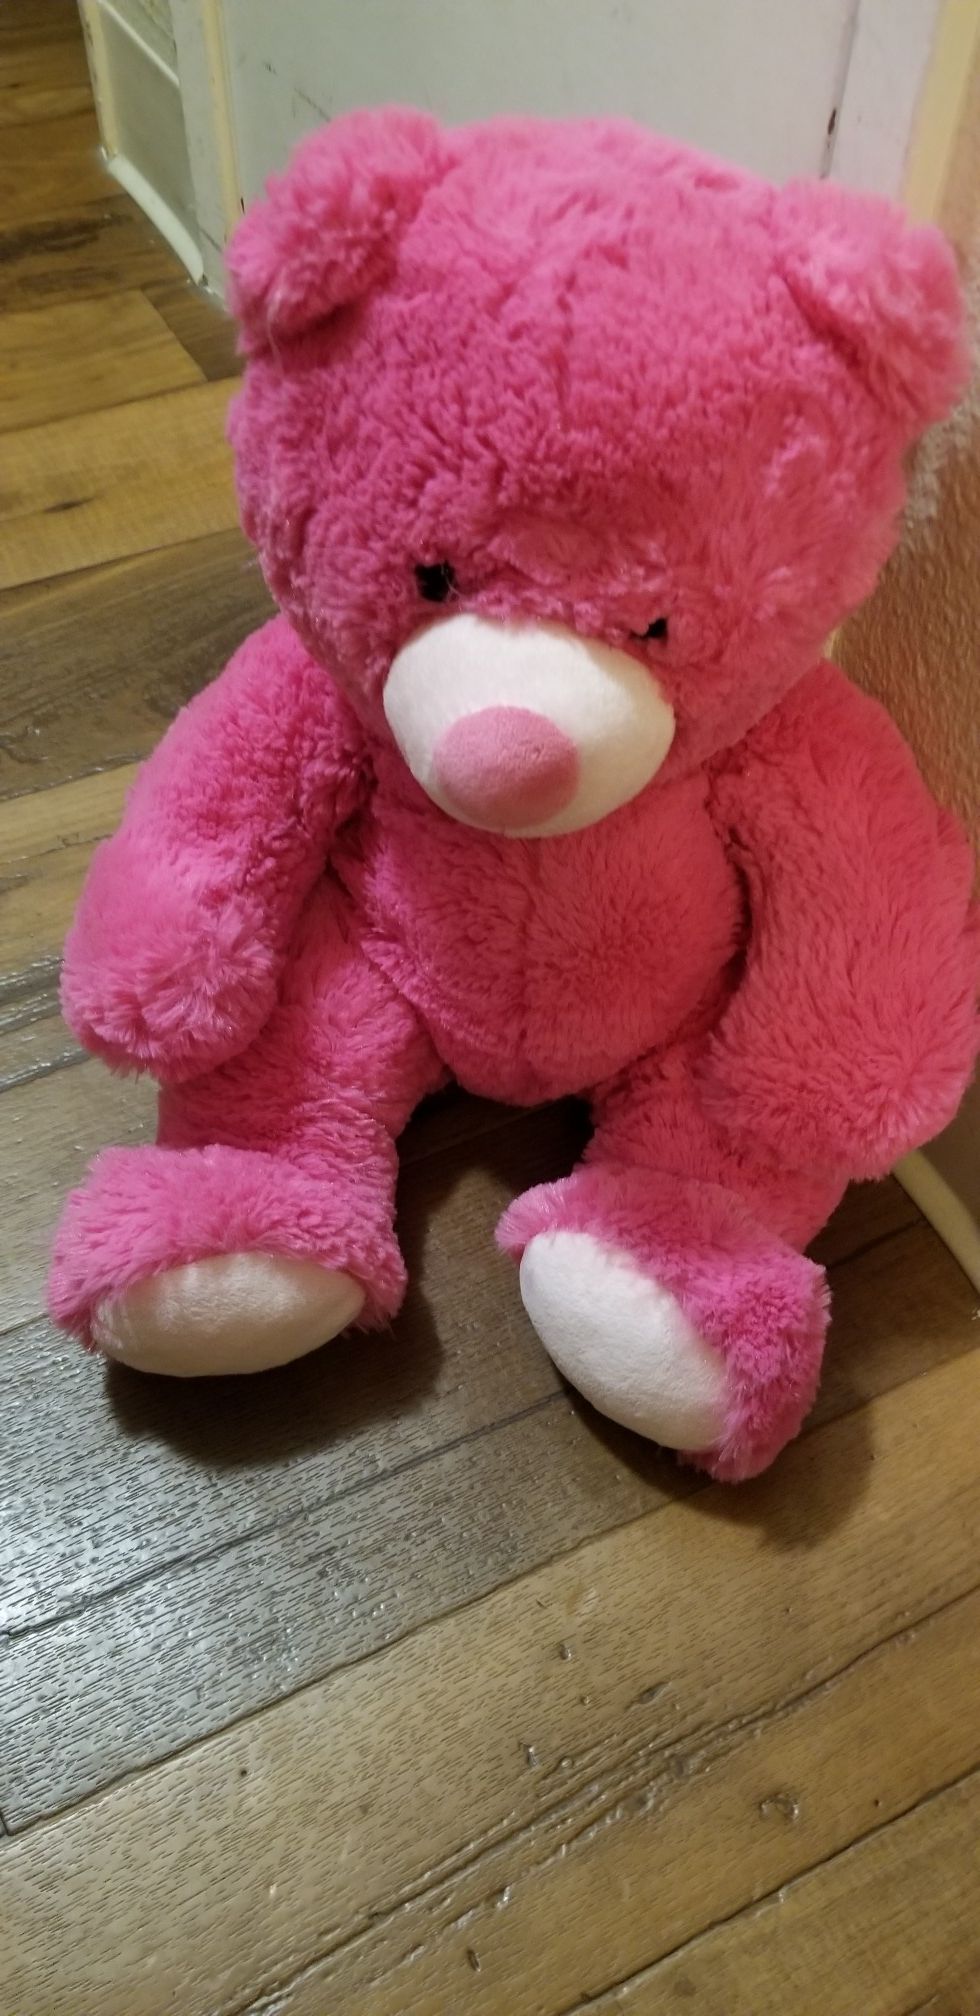 Plush stuffed animal bear